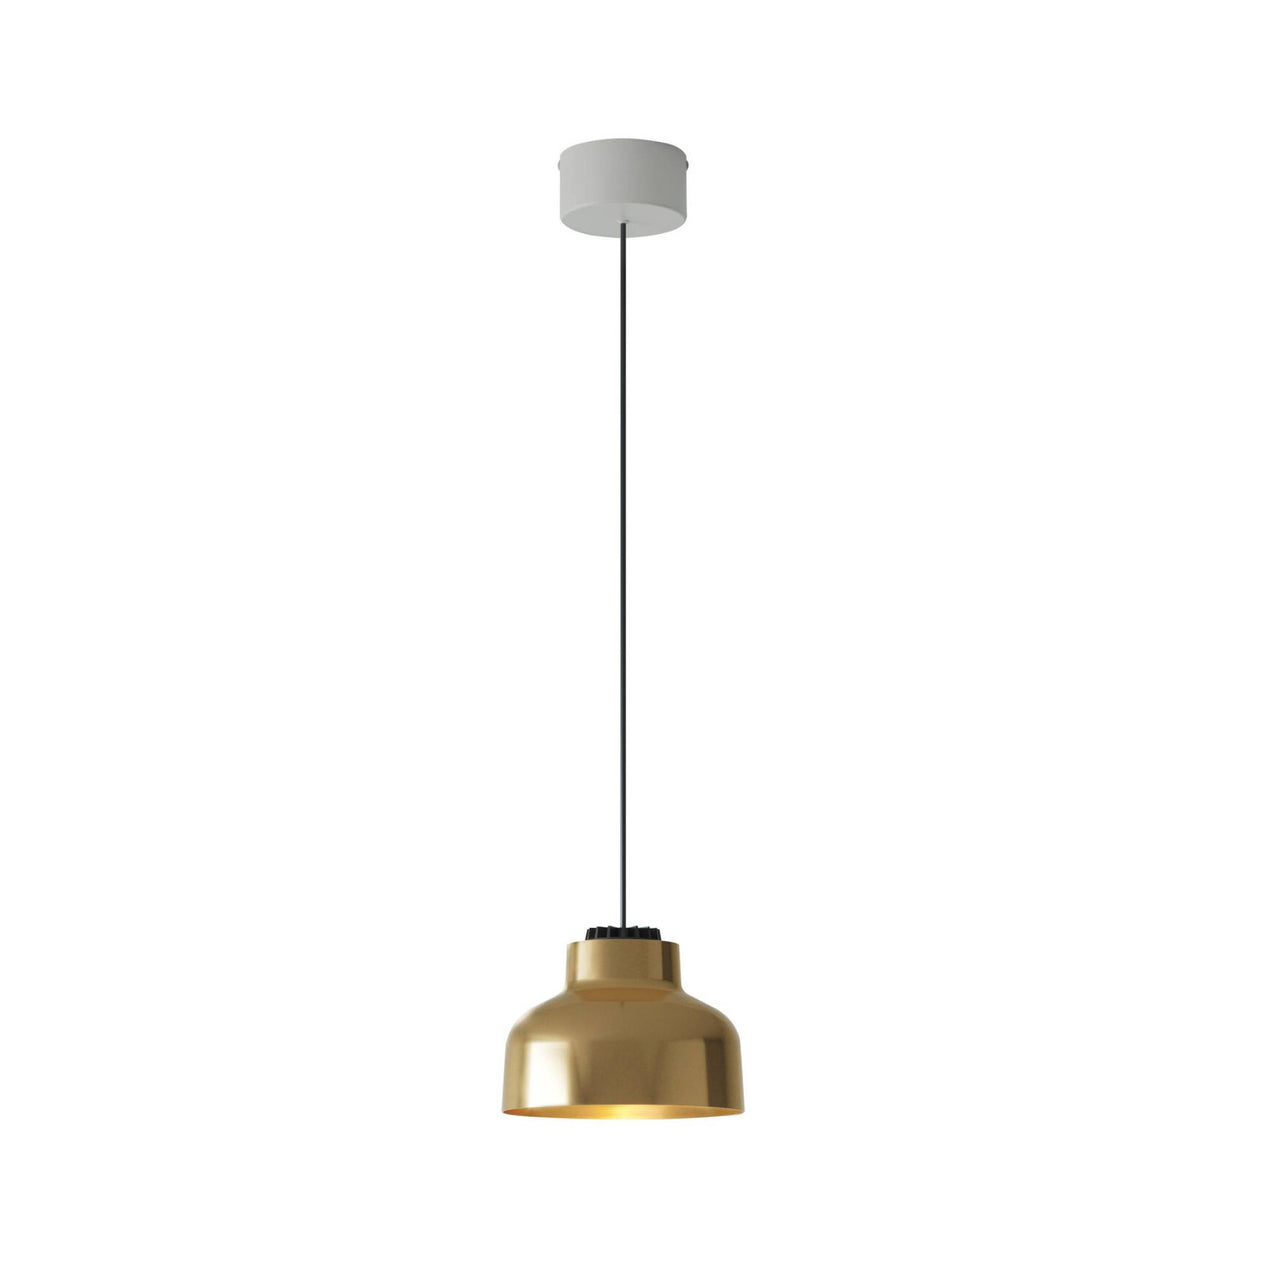 M64 Pendant Lamp: Polished Brass + White